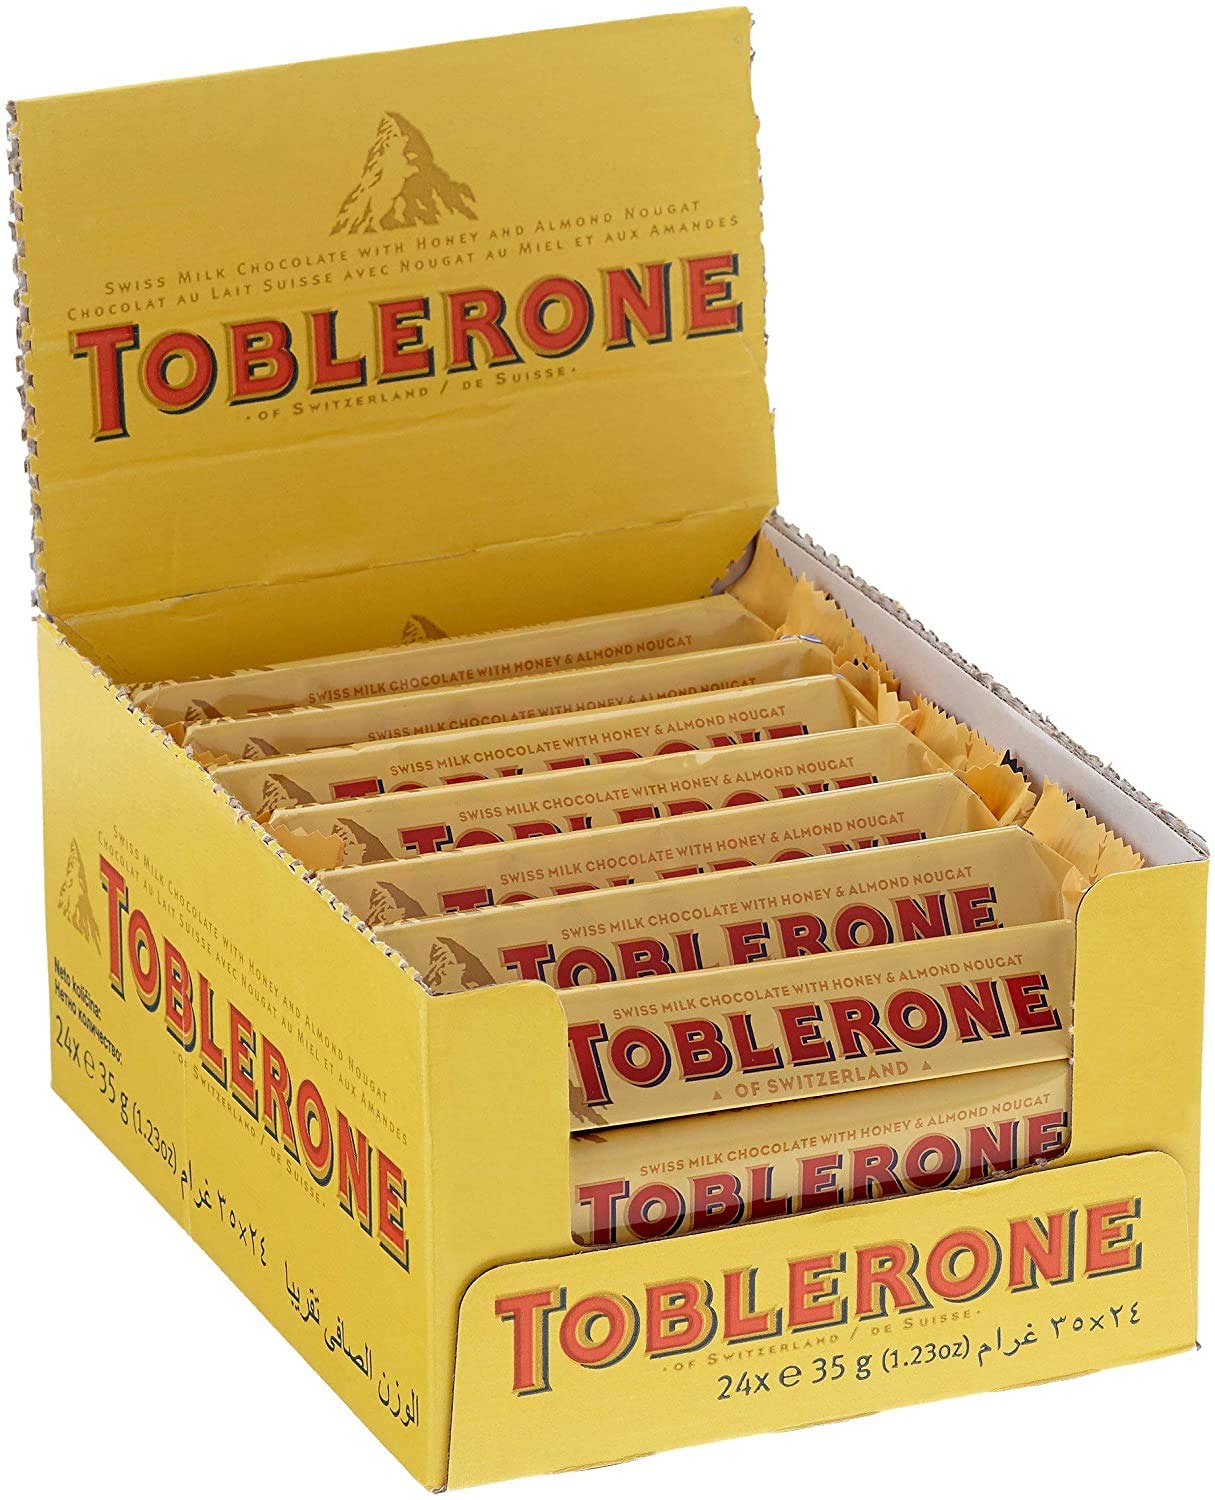 Toblerone - Swiss Milk Chocolate With Honey & Almond Nougat- Box of 24x35G